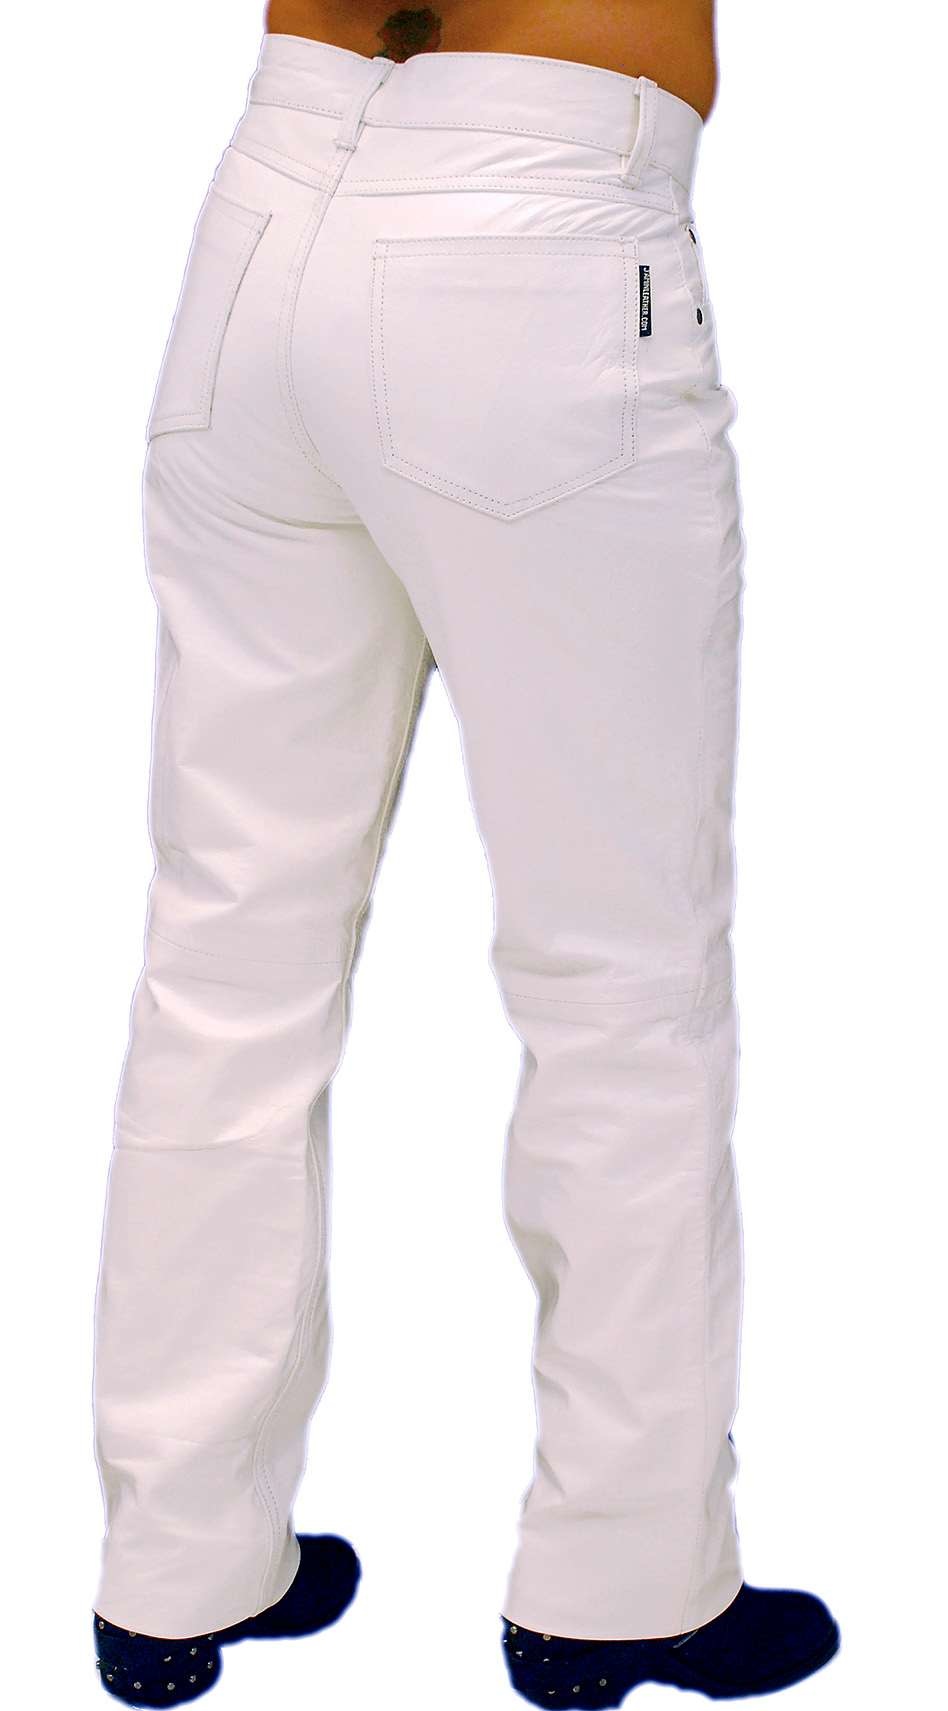 Off White Pants - Trouser Pants - Vegan Leather Pants - Lulus